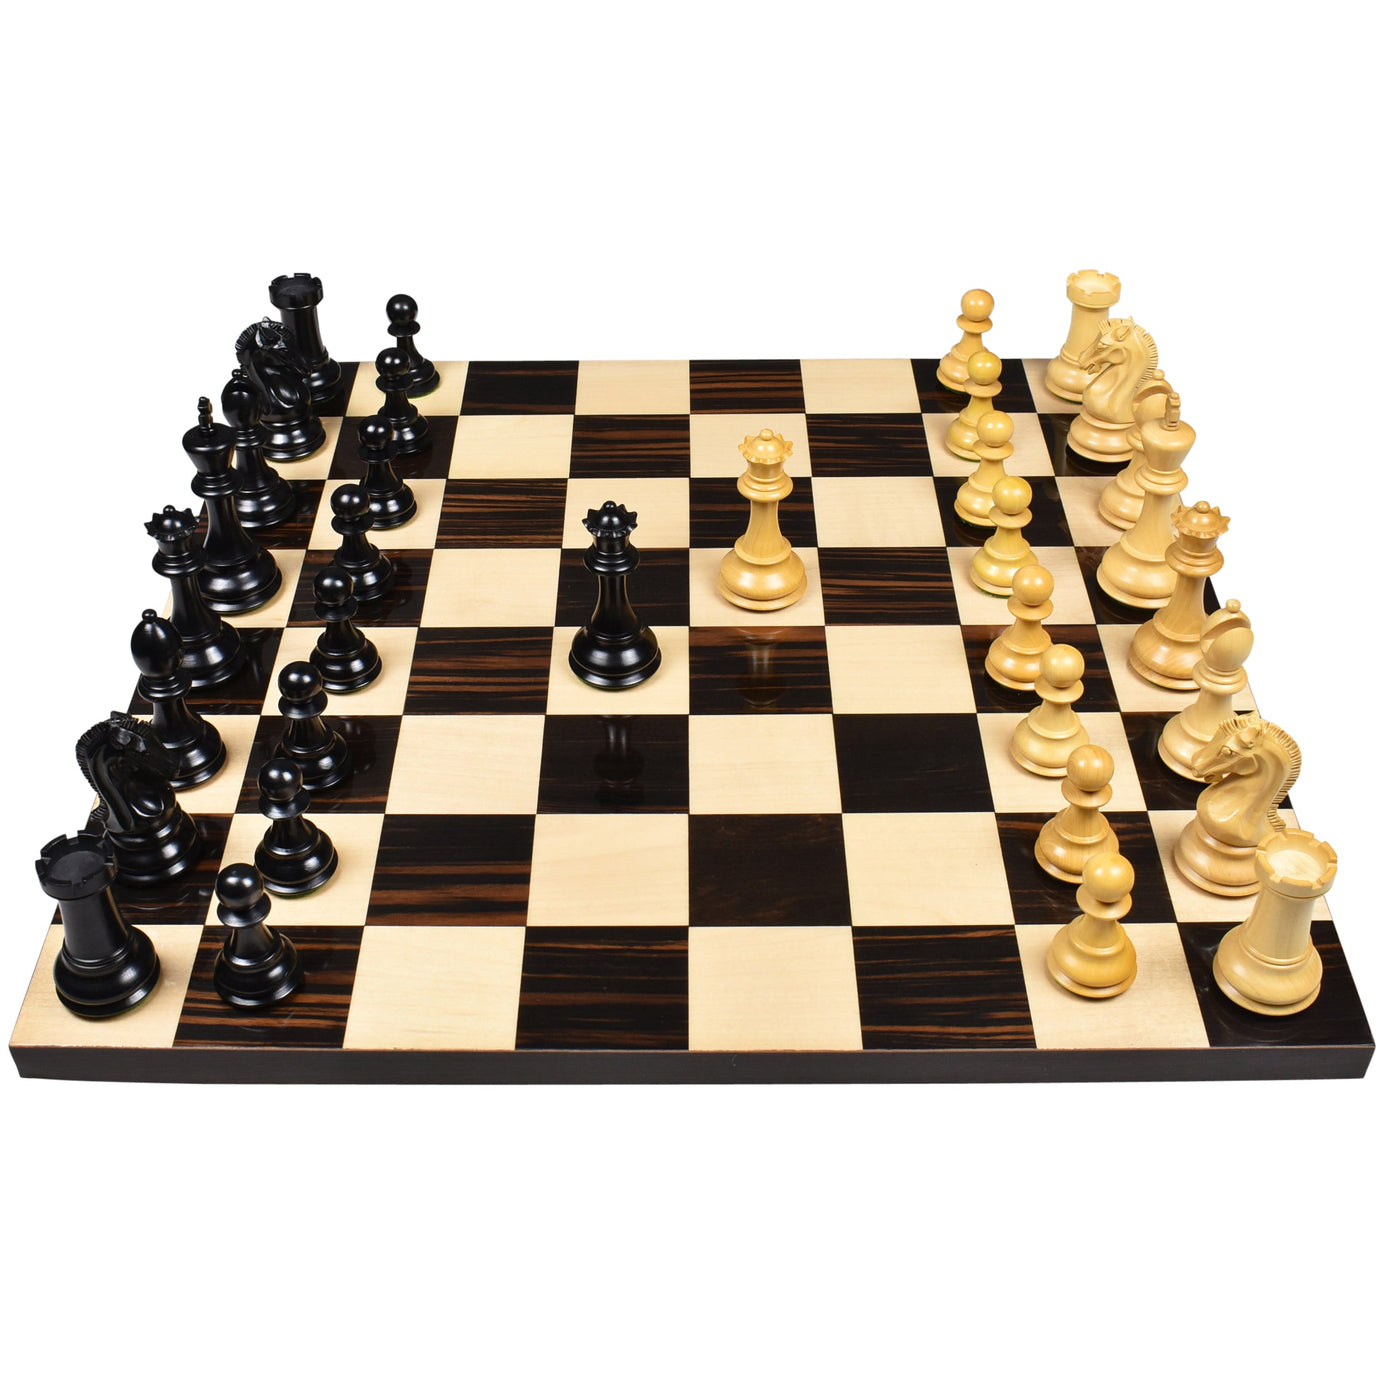 Craftsman Series Staunton Chess Pieces Only set